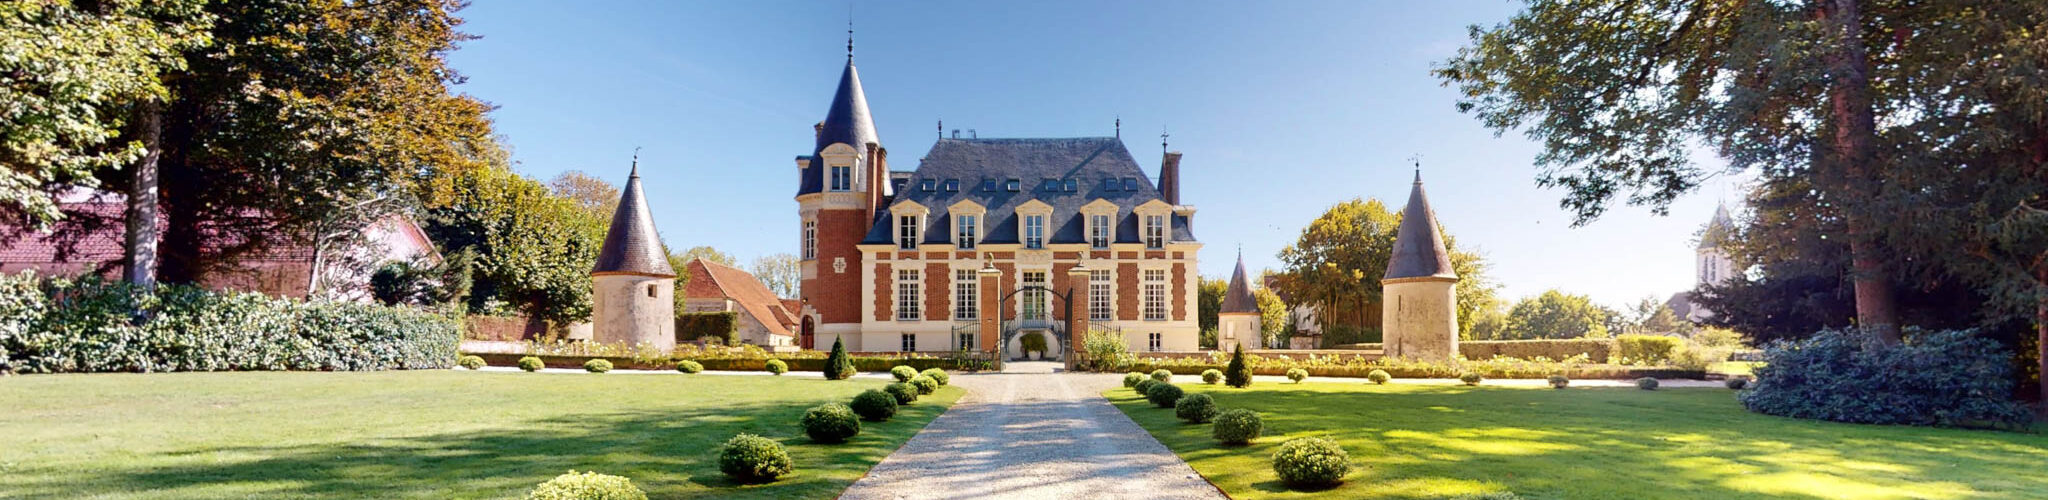 chateau de bonaventure wedding venues in france